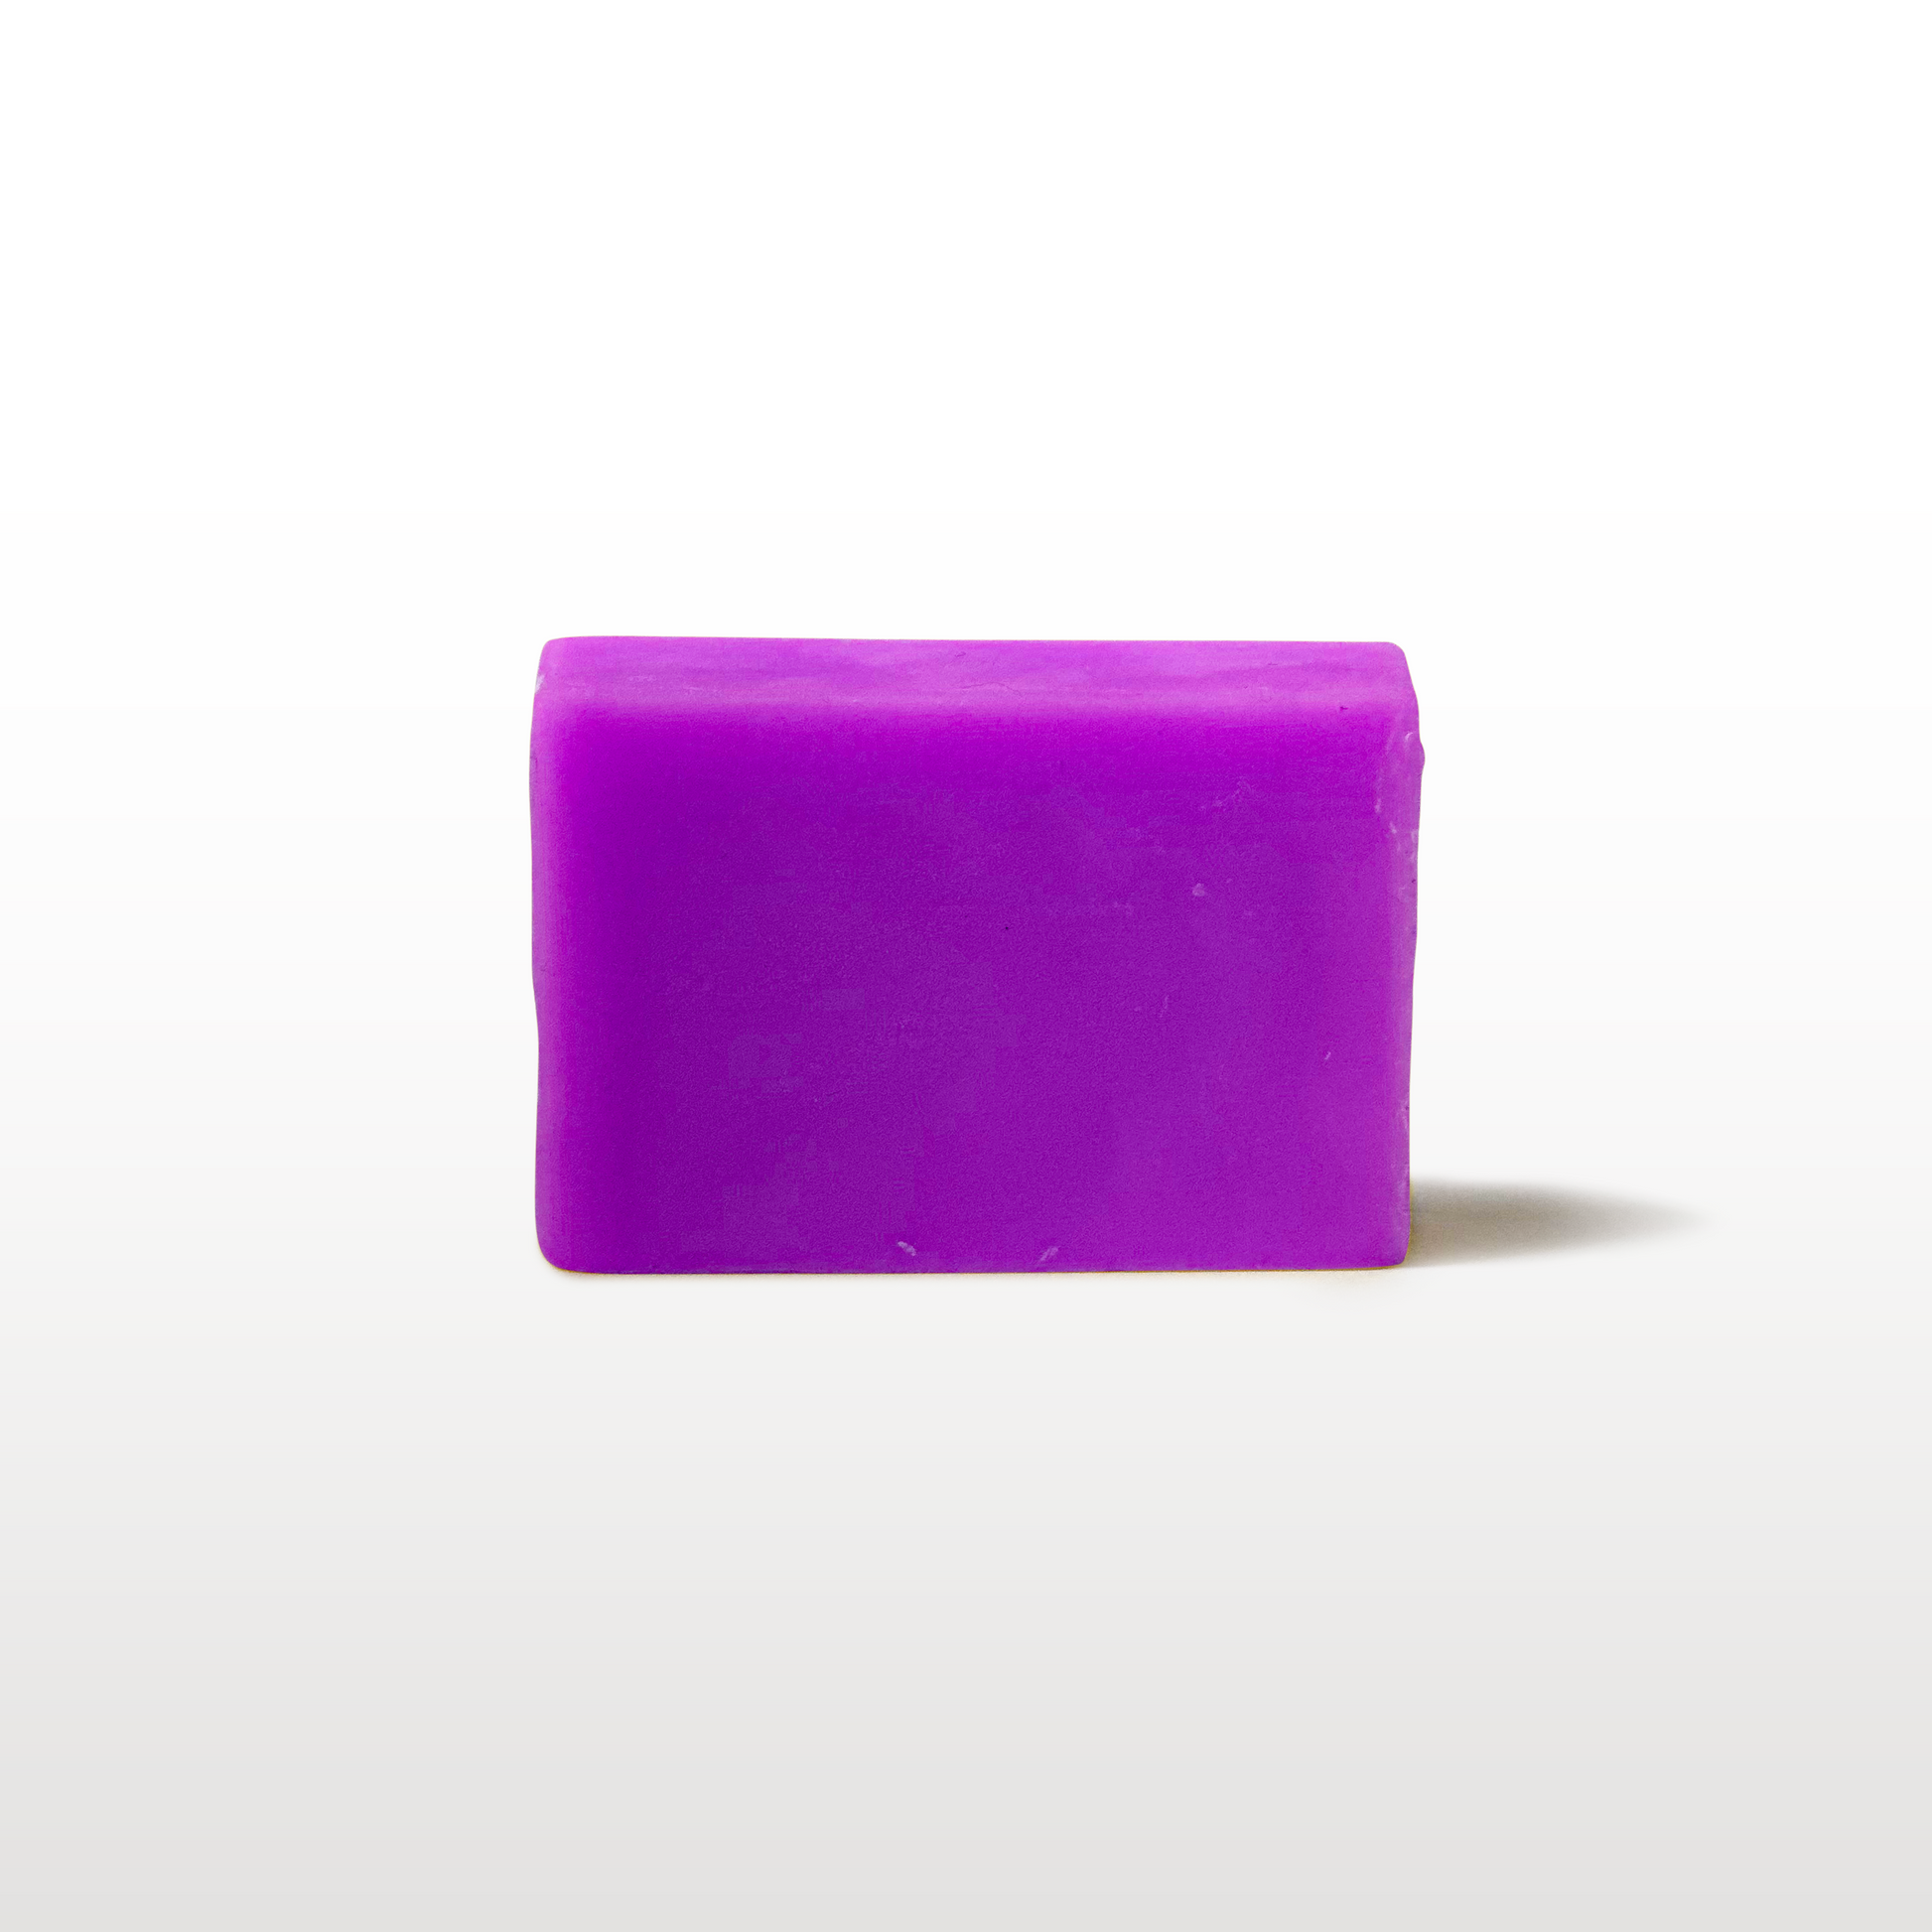 A bar of purple wax